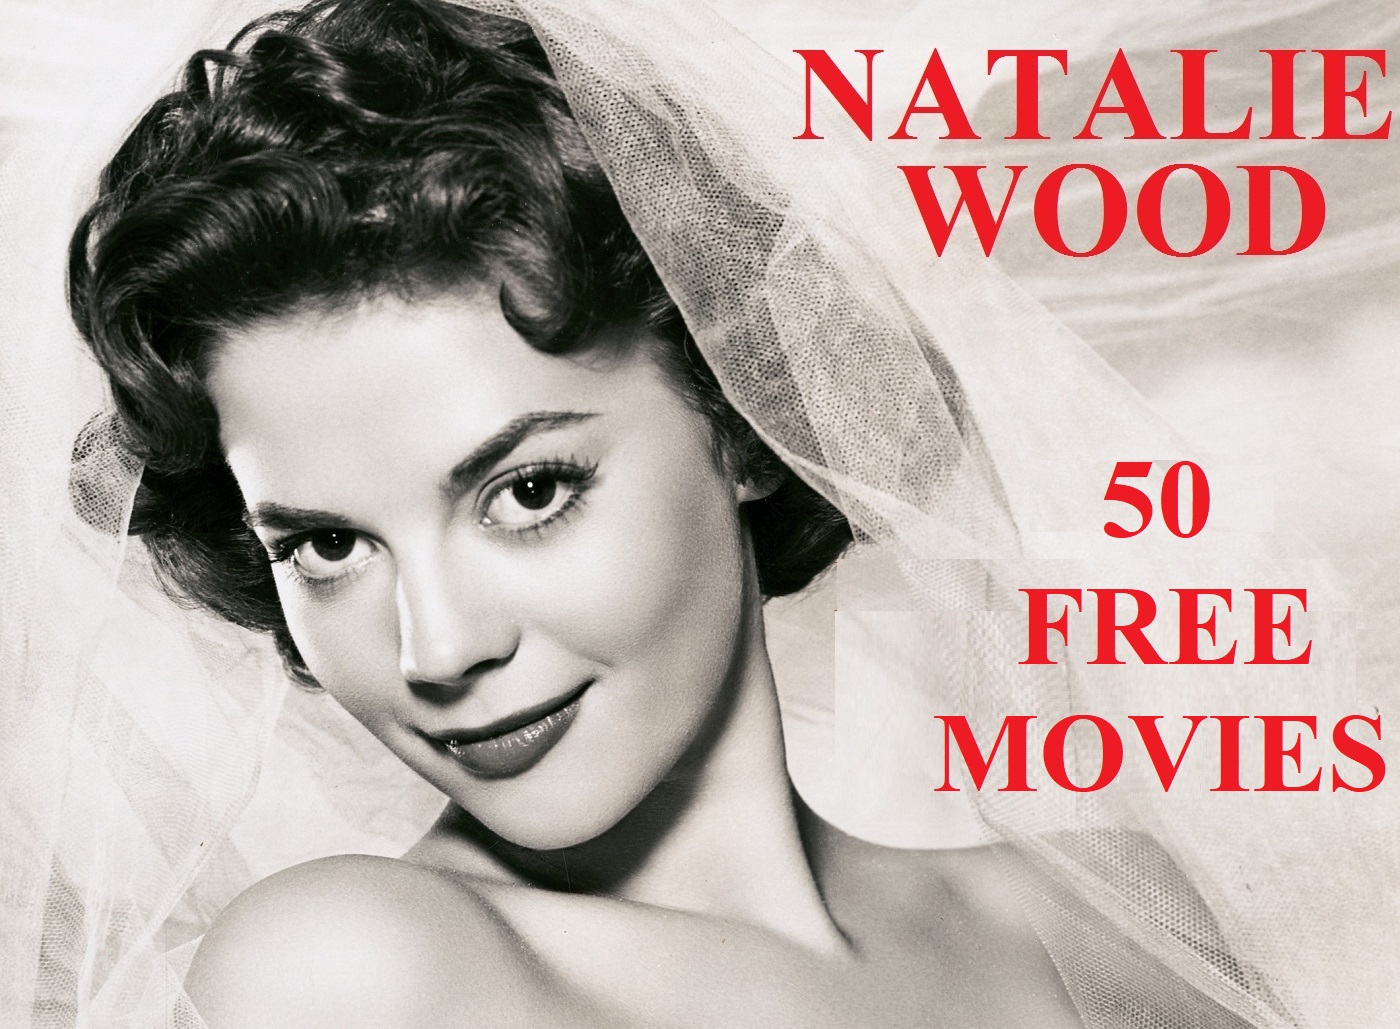 NATALIE WOOD: FREE MOVIES